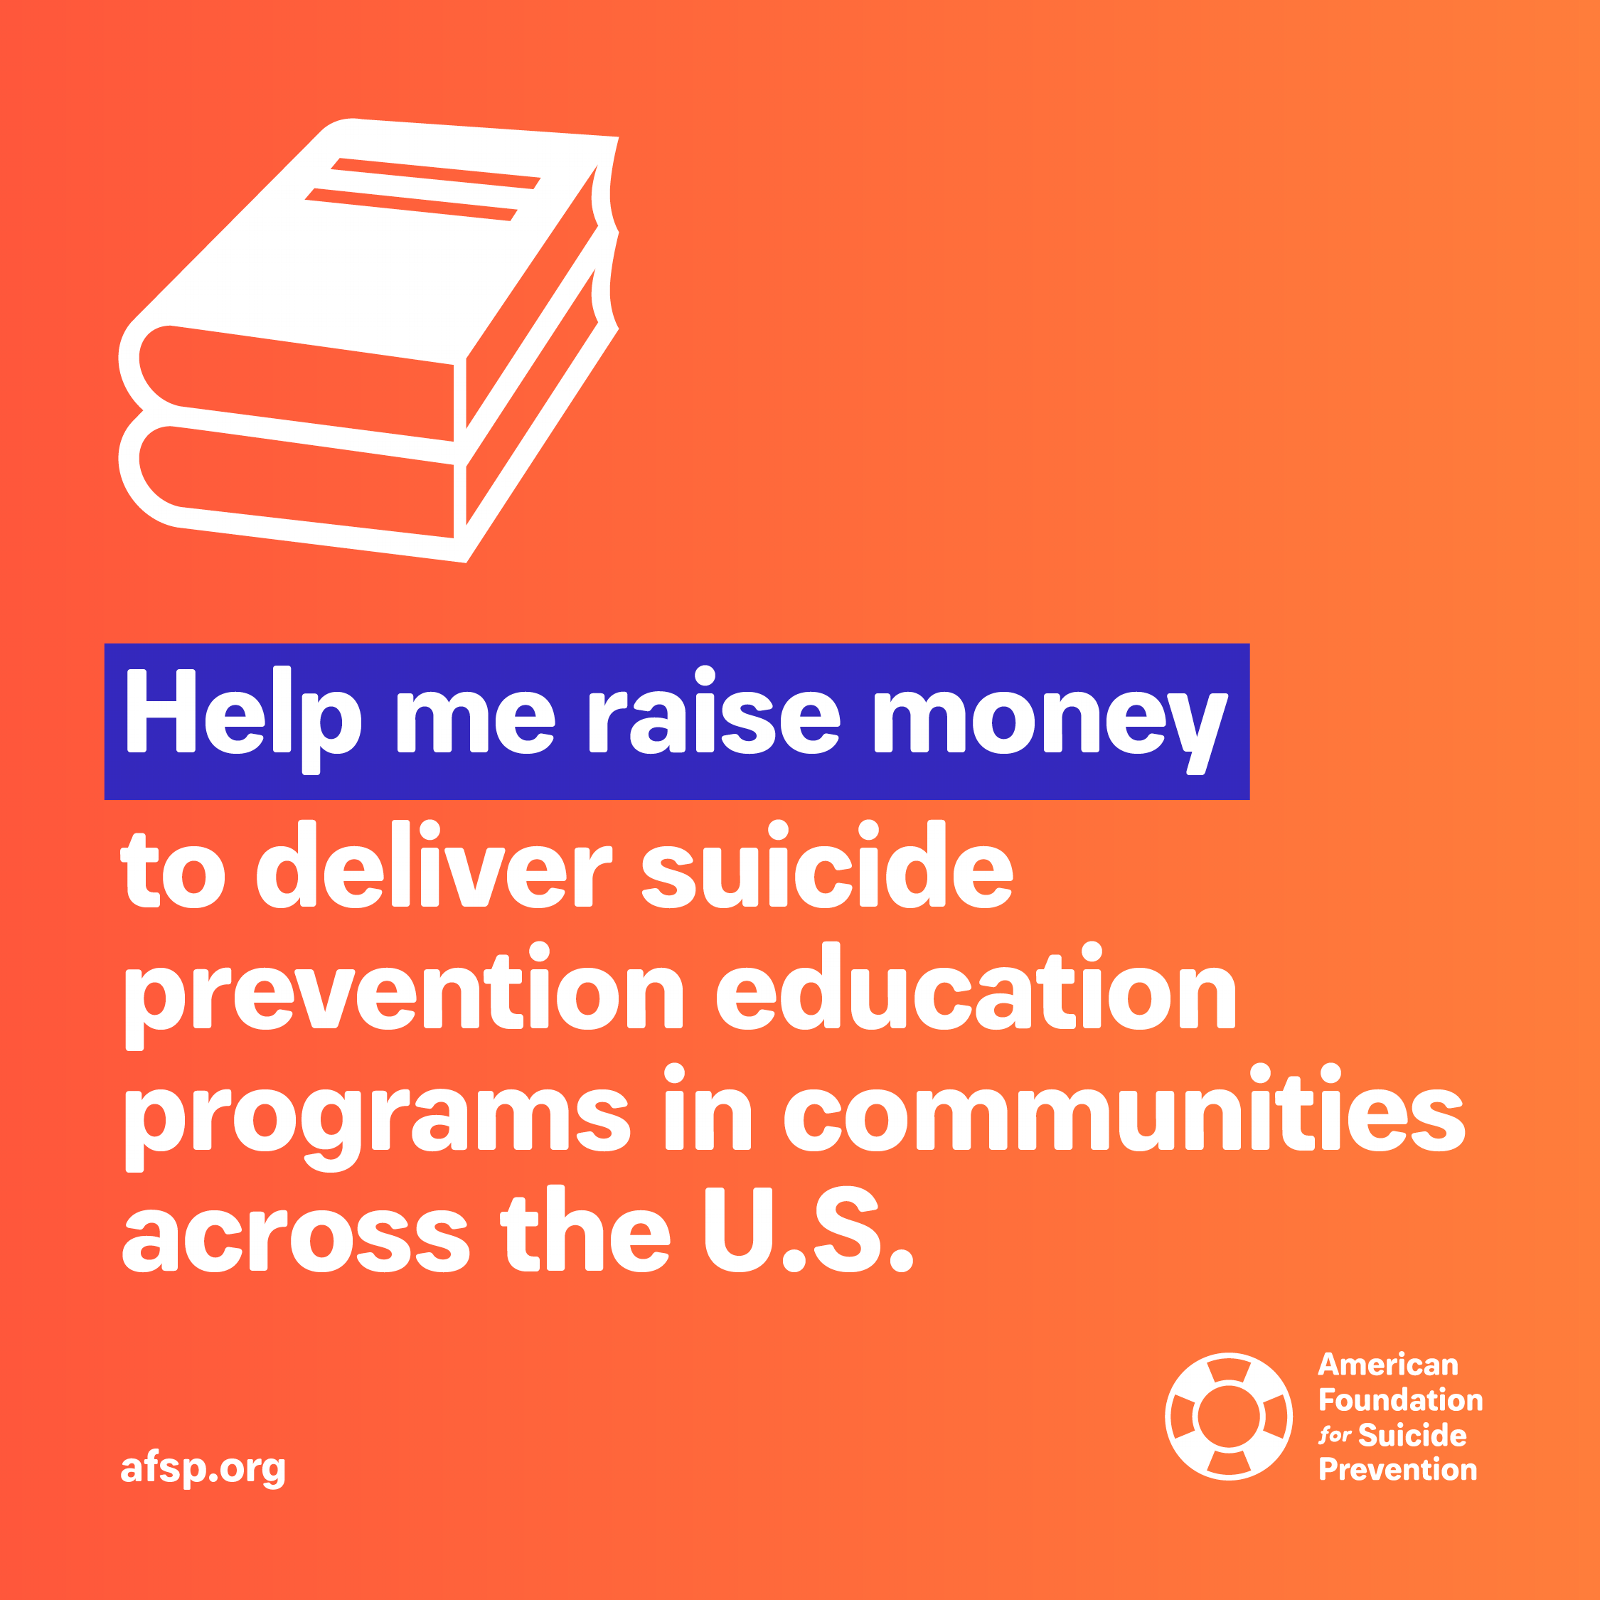 Help me raise money to deliver suicide prevention education programs in communities across the U.S.